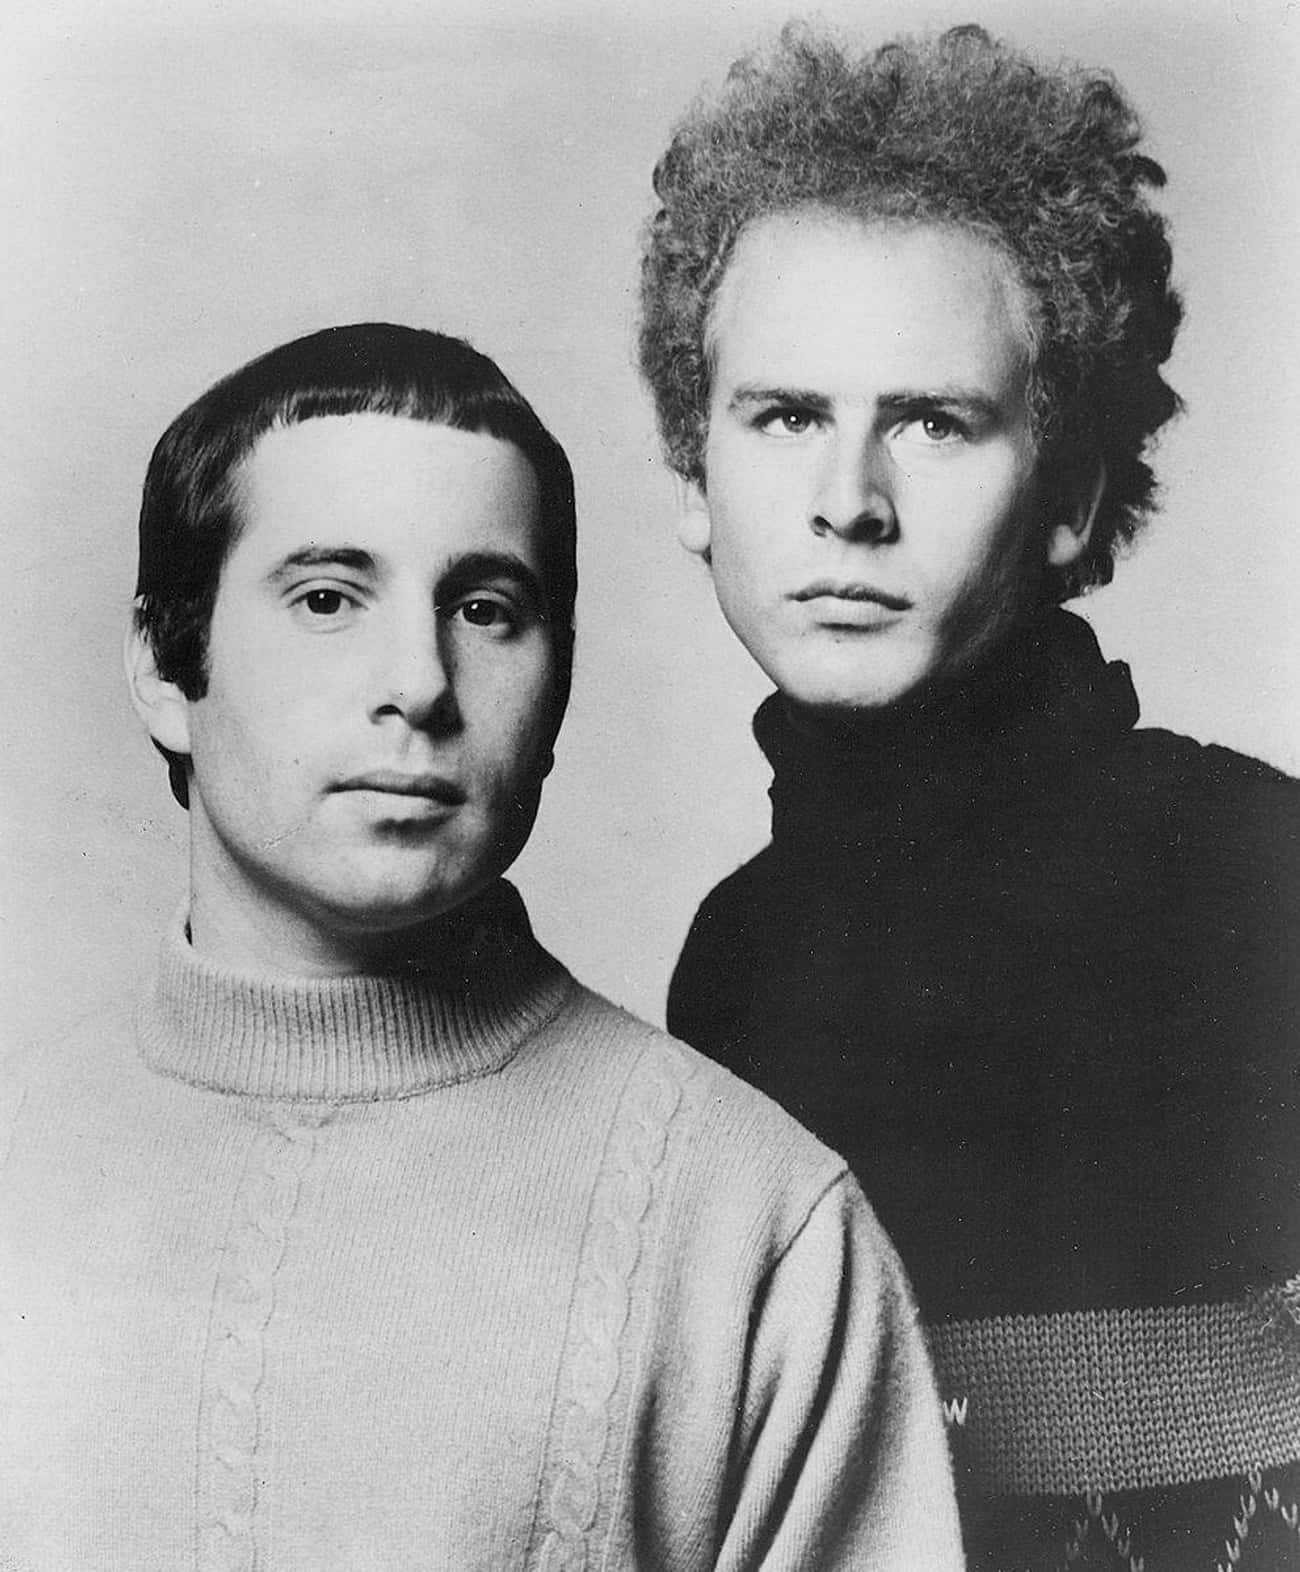 Simon & Garfunkel Broke Up When Garfunkel Took An Acting Gig And Didn’t Tell Simon